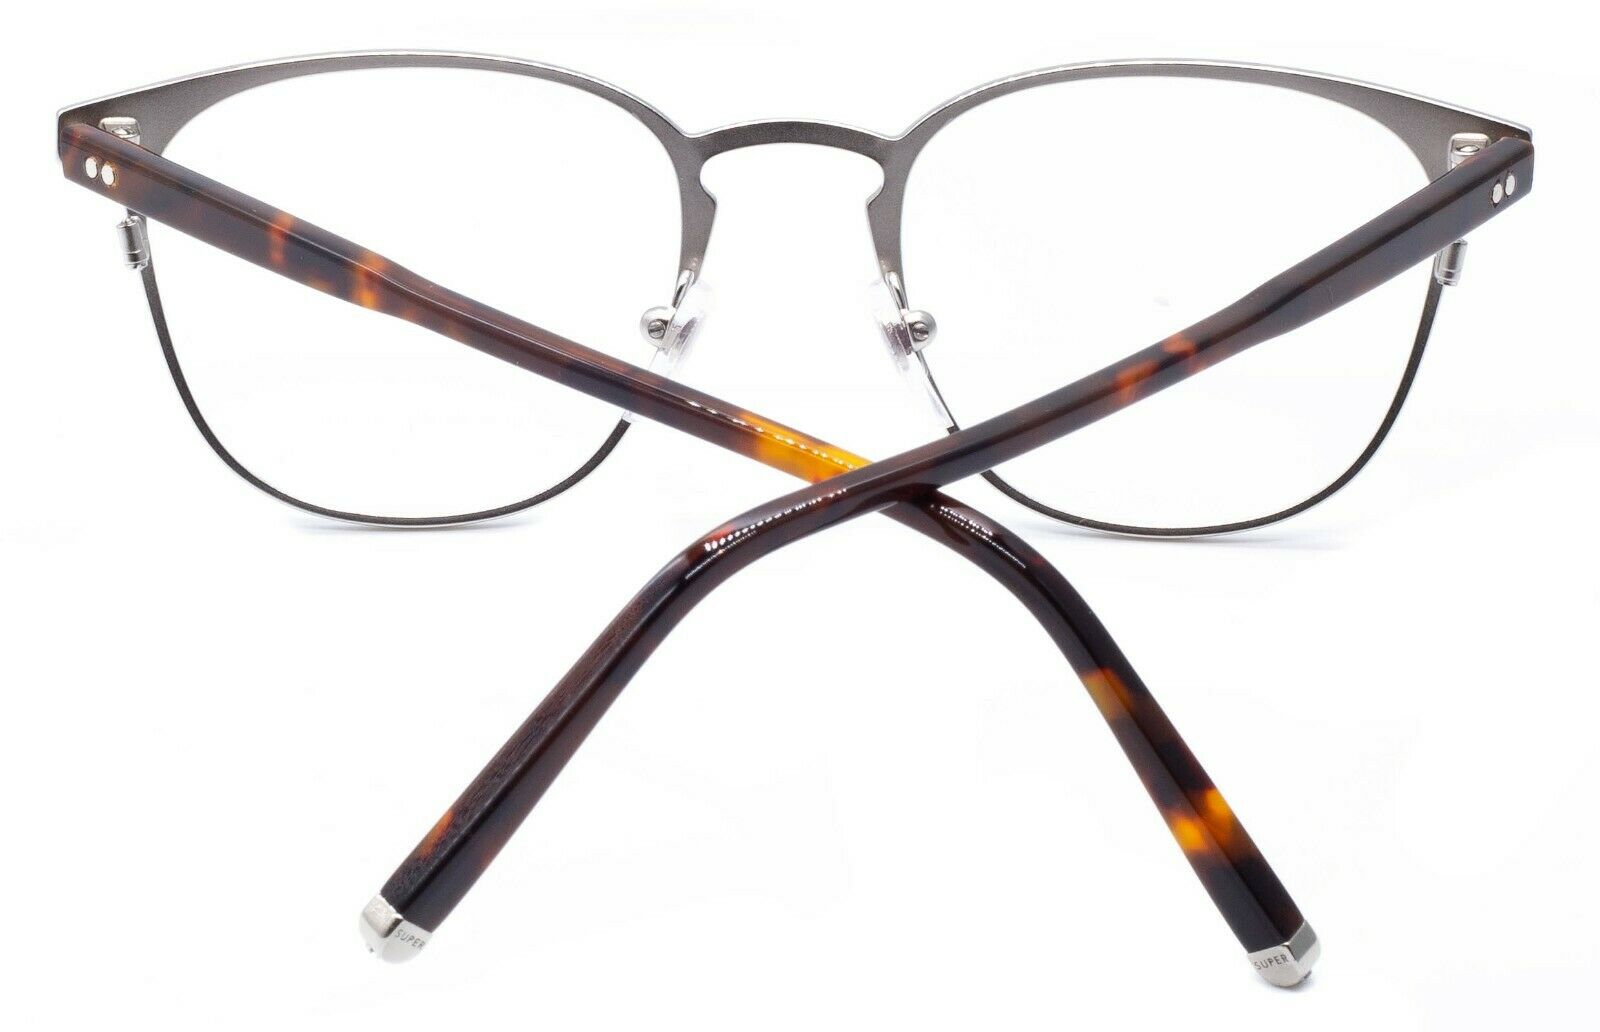 RETROSUPERFUTURE GMX/R Numero 37 Argento 49mm Eyewear Glasses RX Optical - New